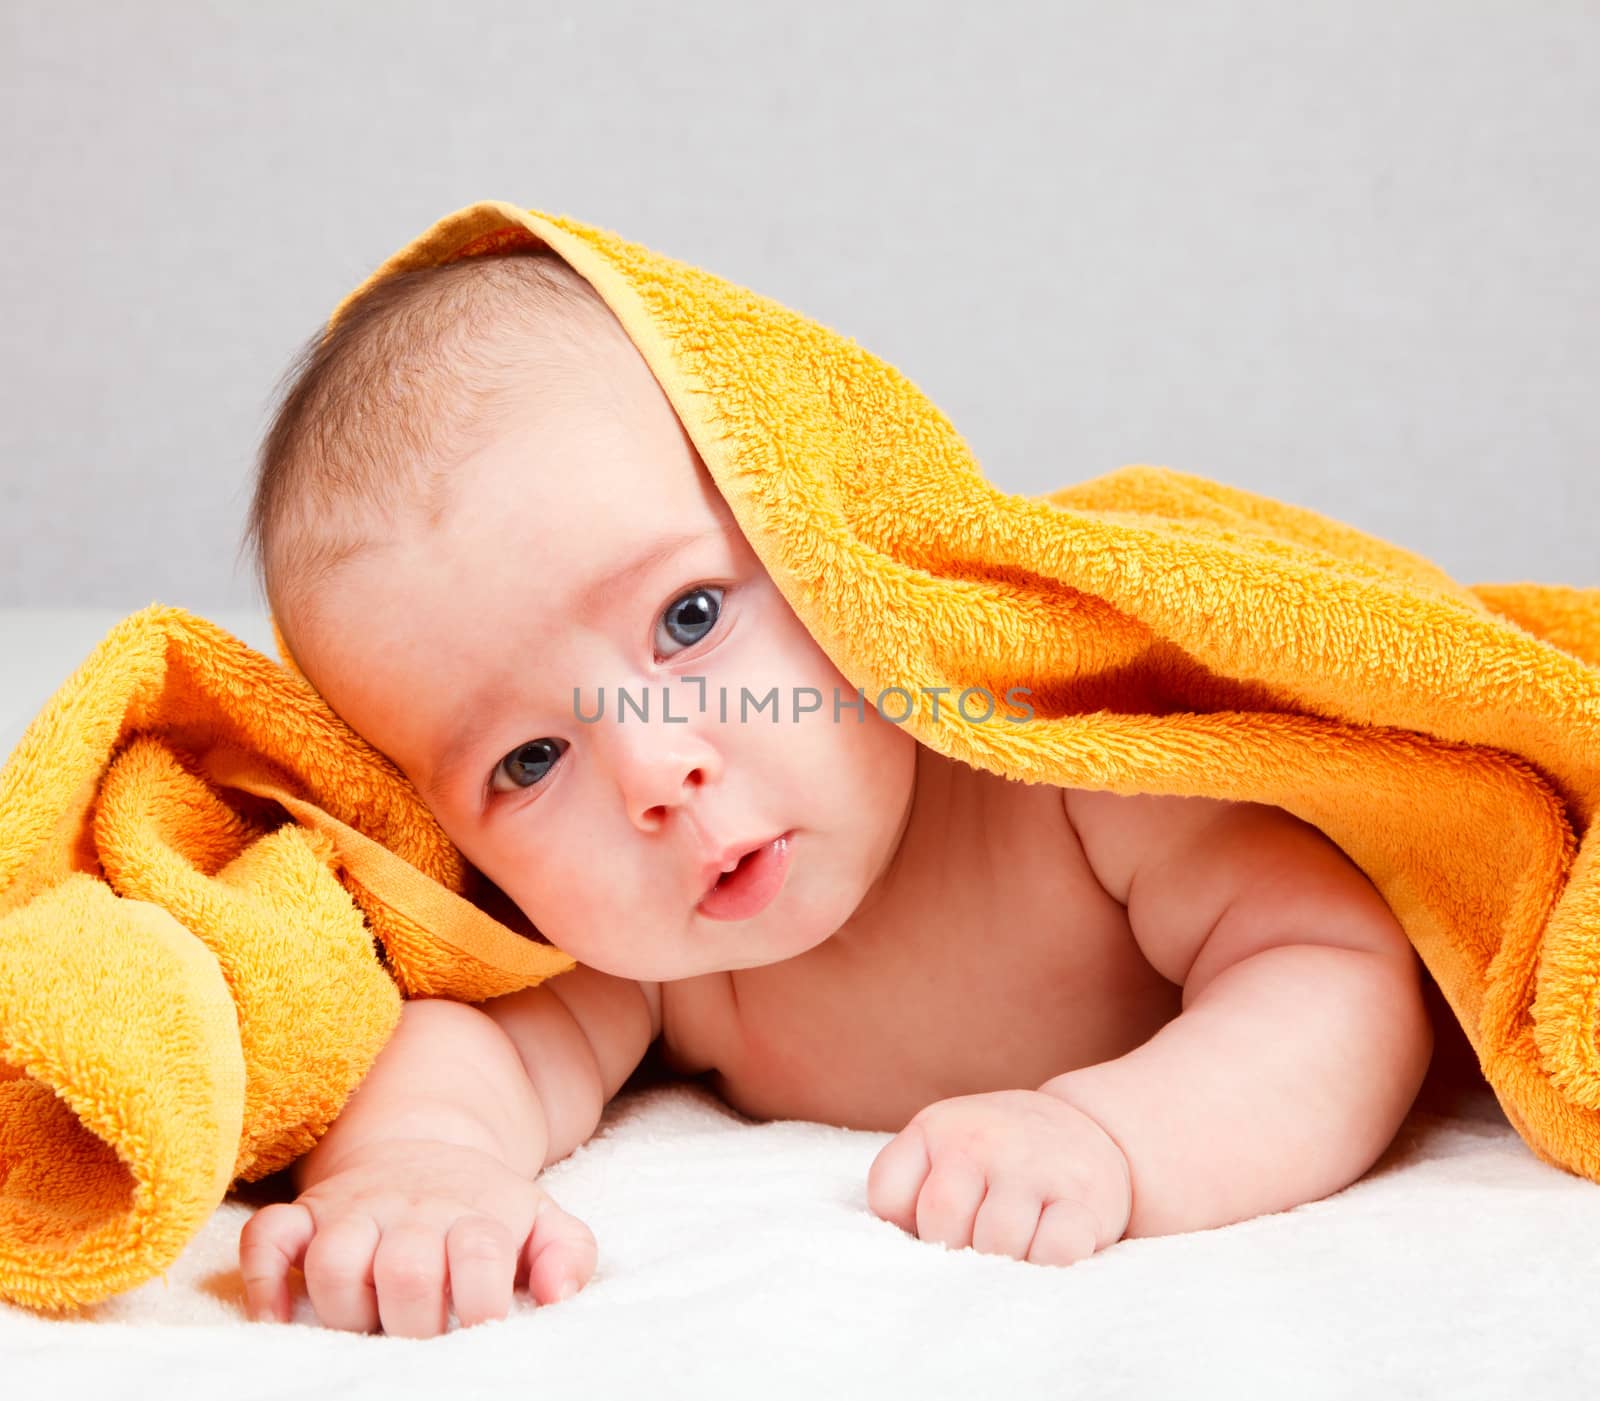 Infant under towel by naumoid